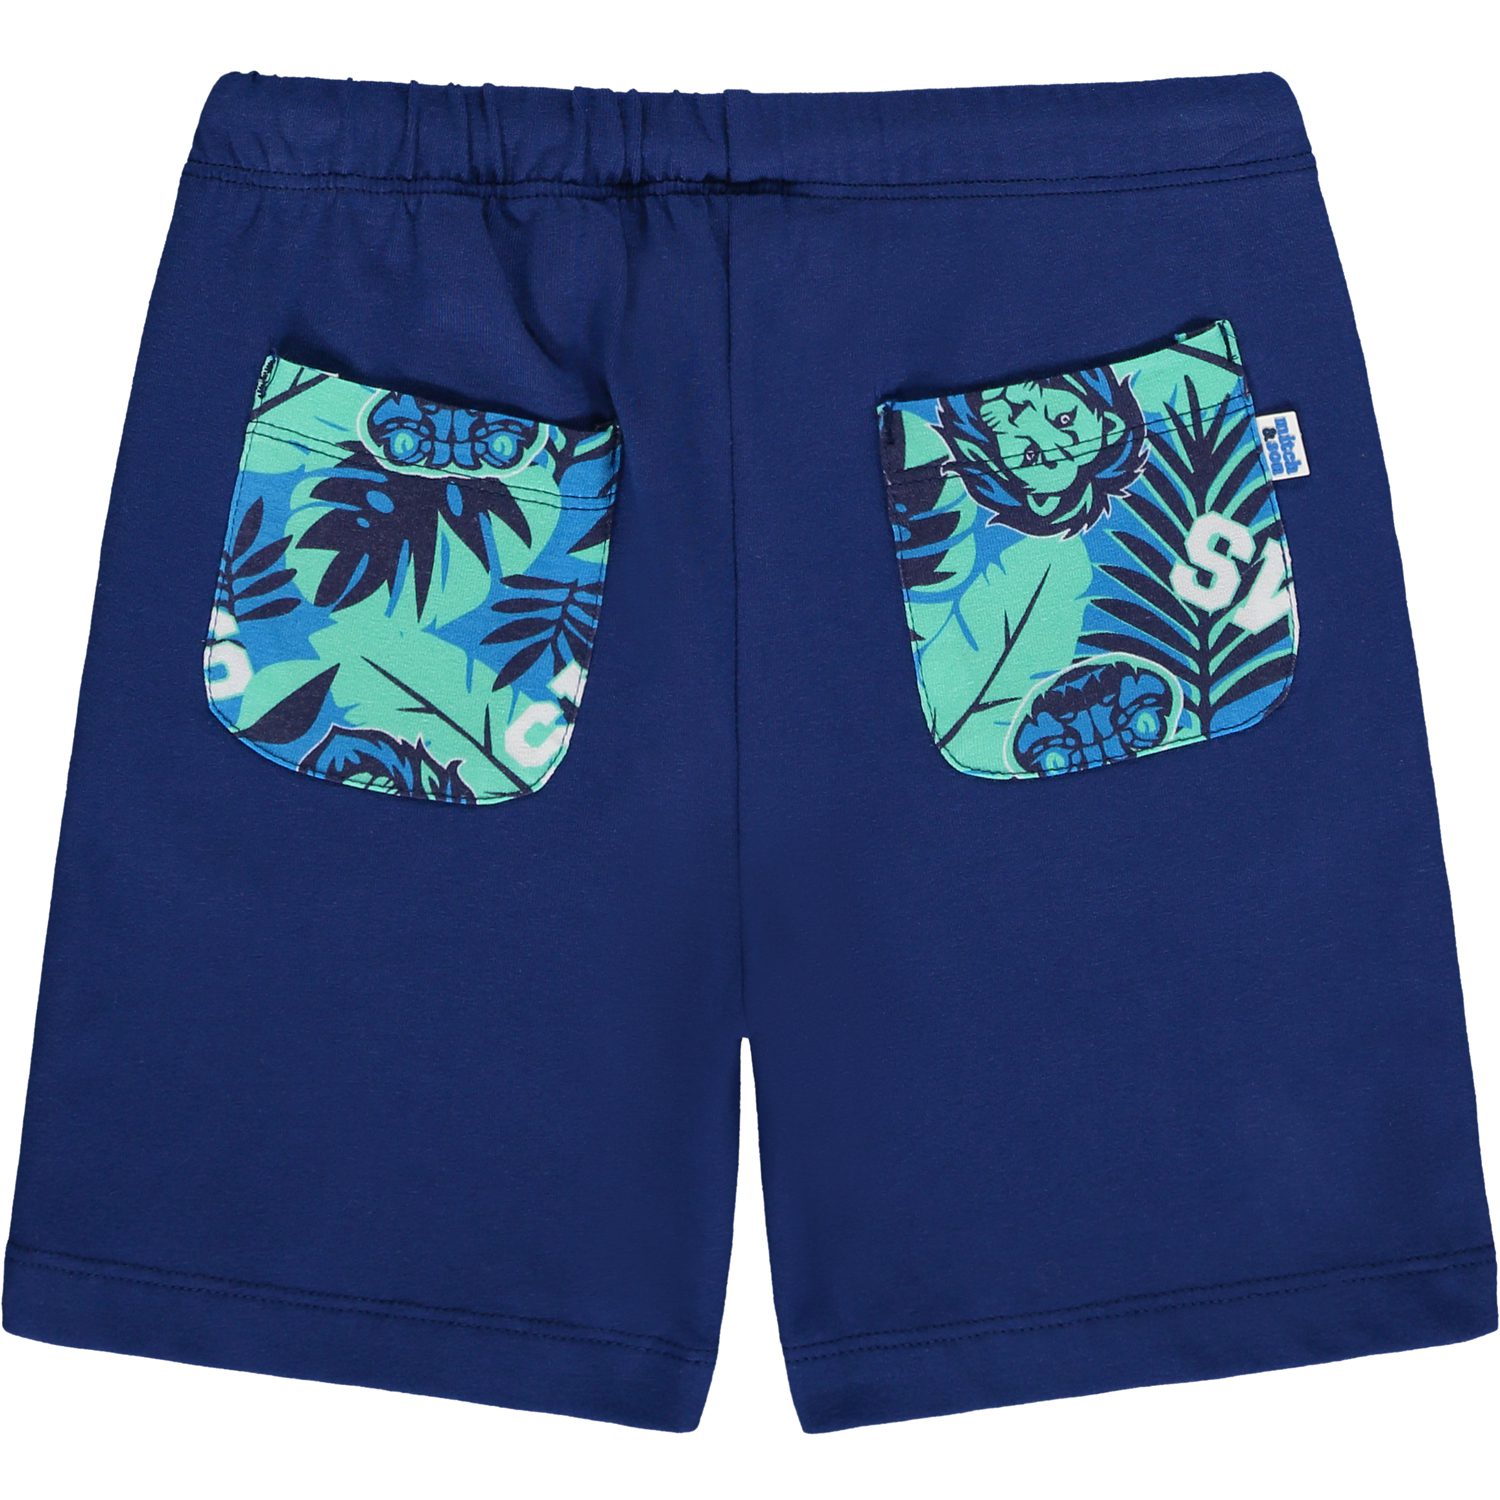 Mitch&Son Kian blauw setje korte broek en t-shirt met logo achterkant